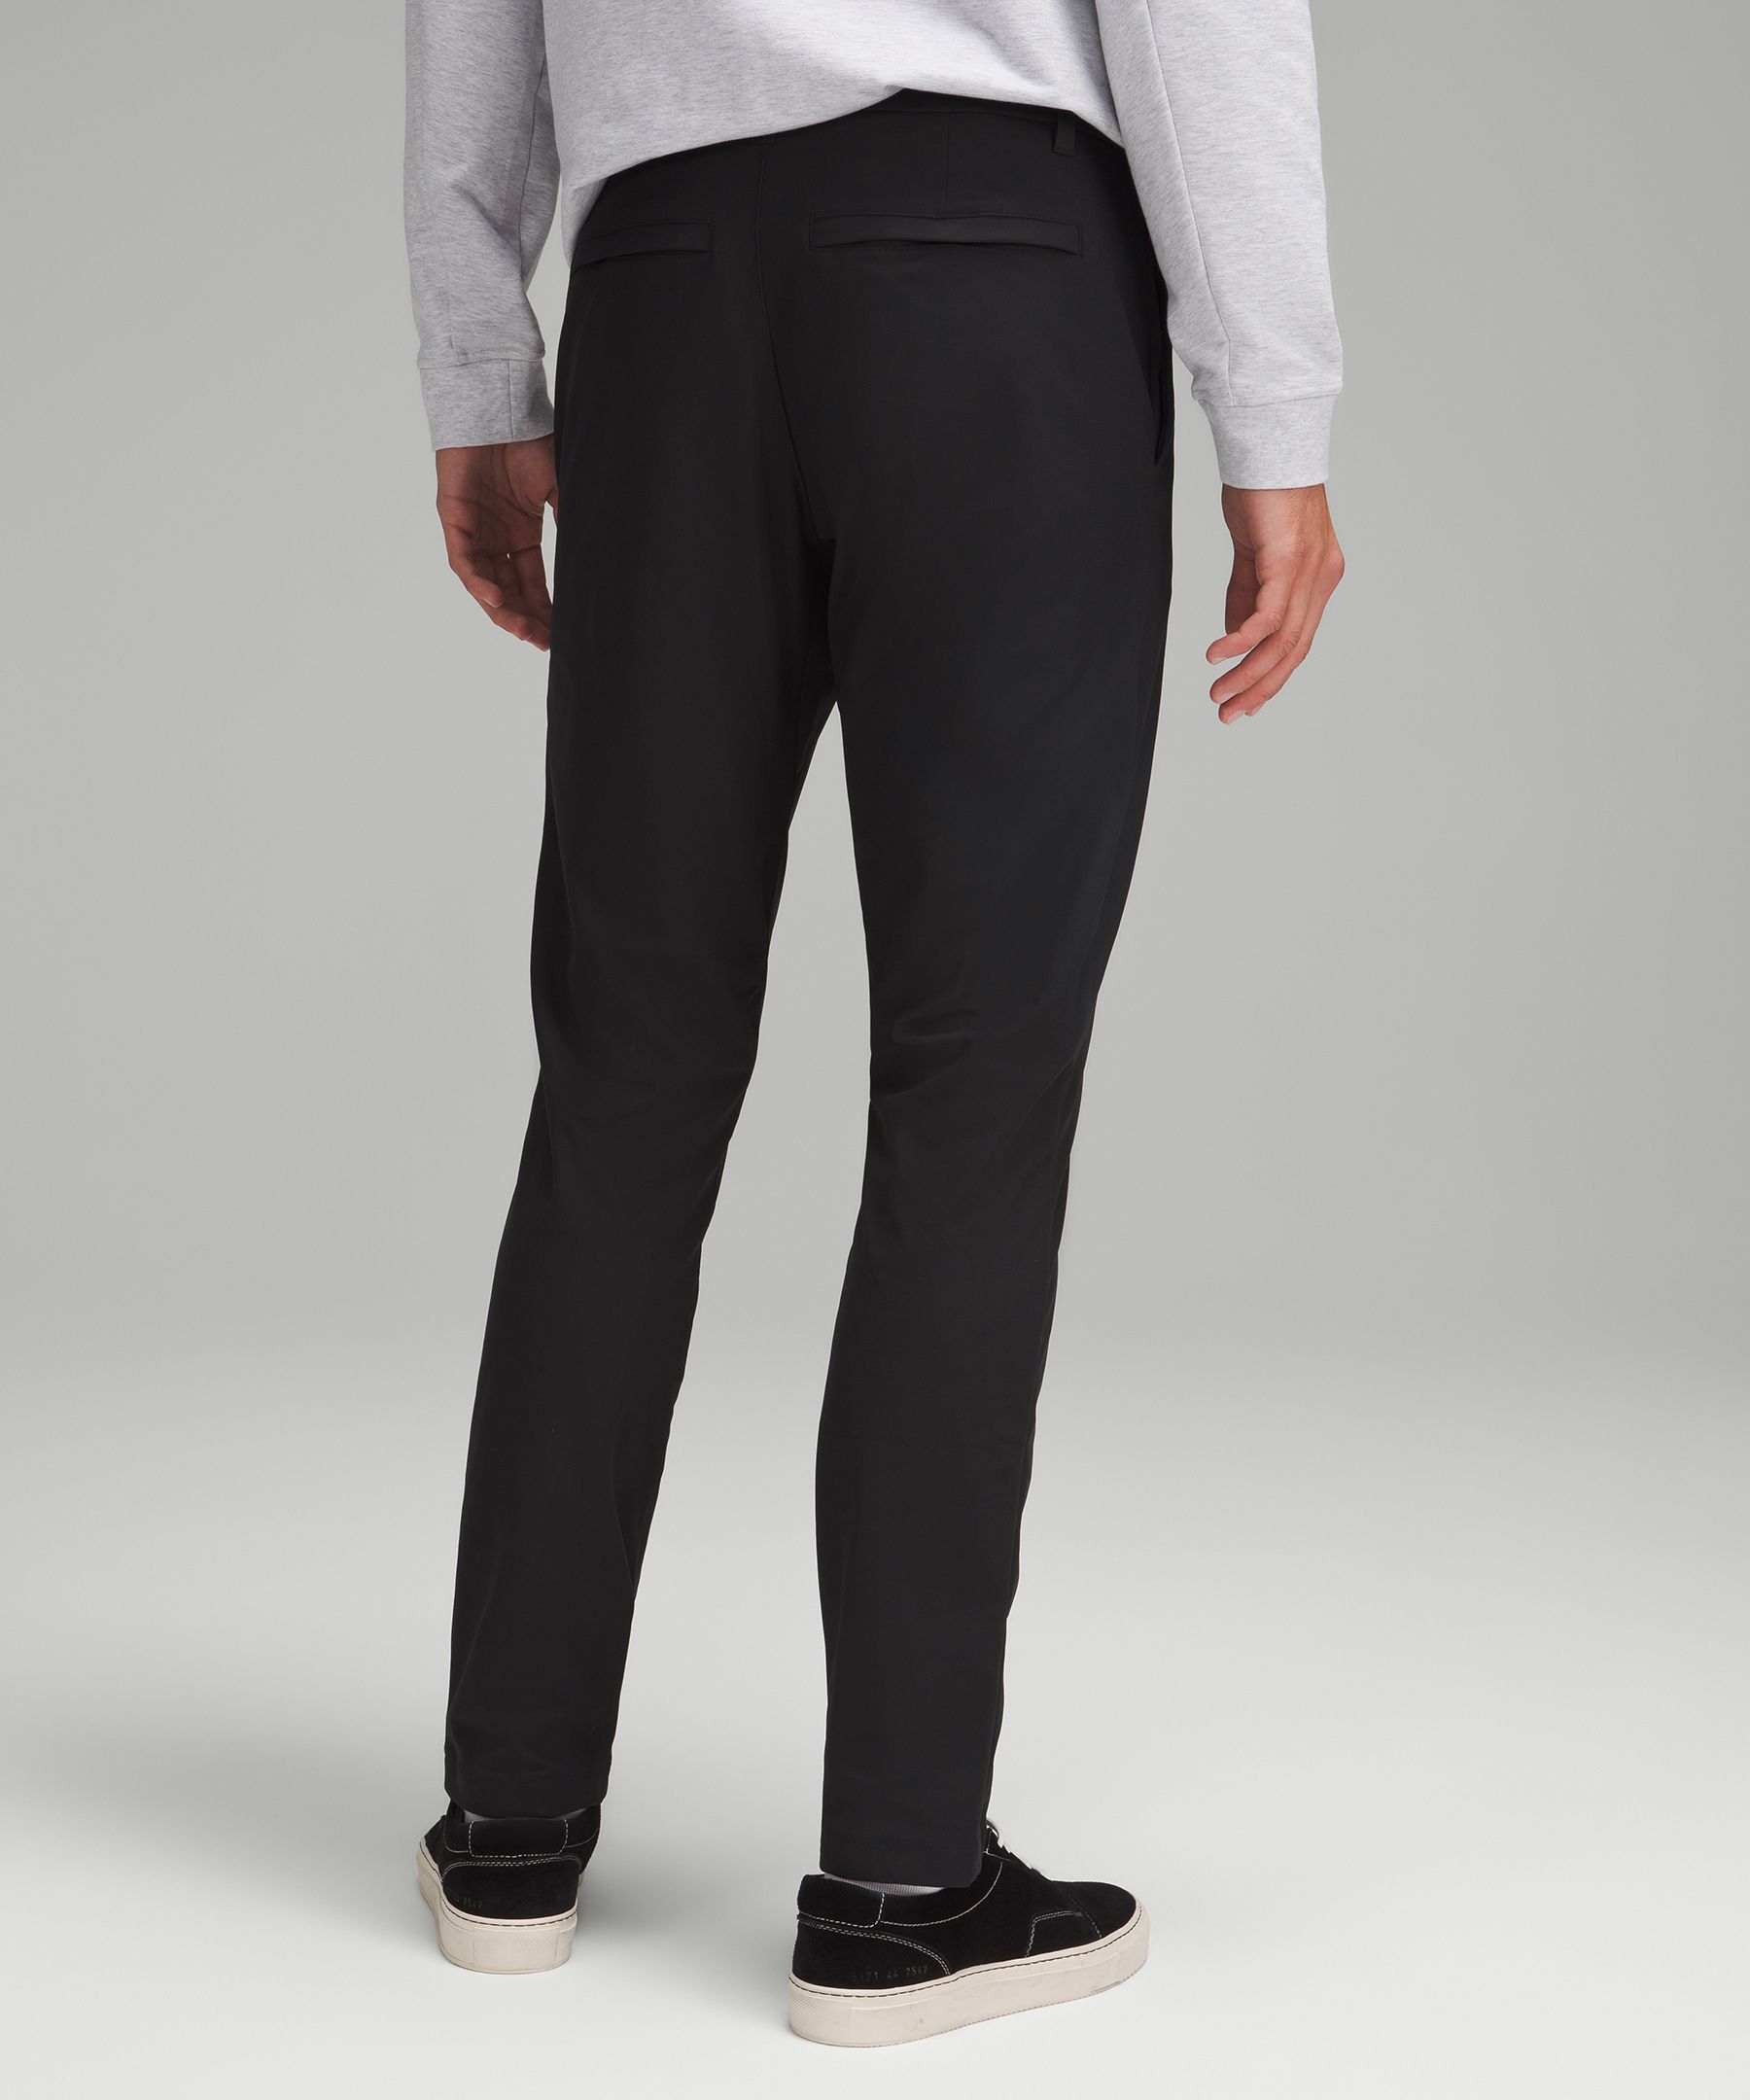 Lululemon athletica Commission Classic-Fit Pant 37 *Warpstreme Online Only, Men's Trousers